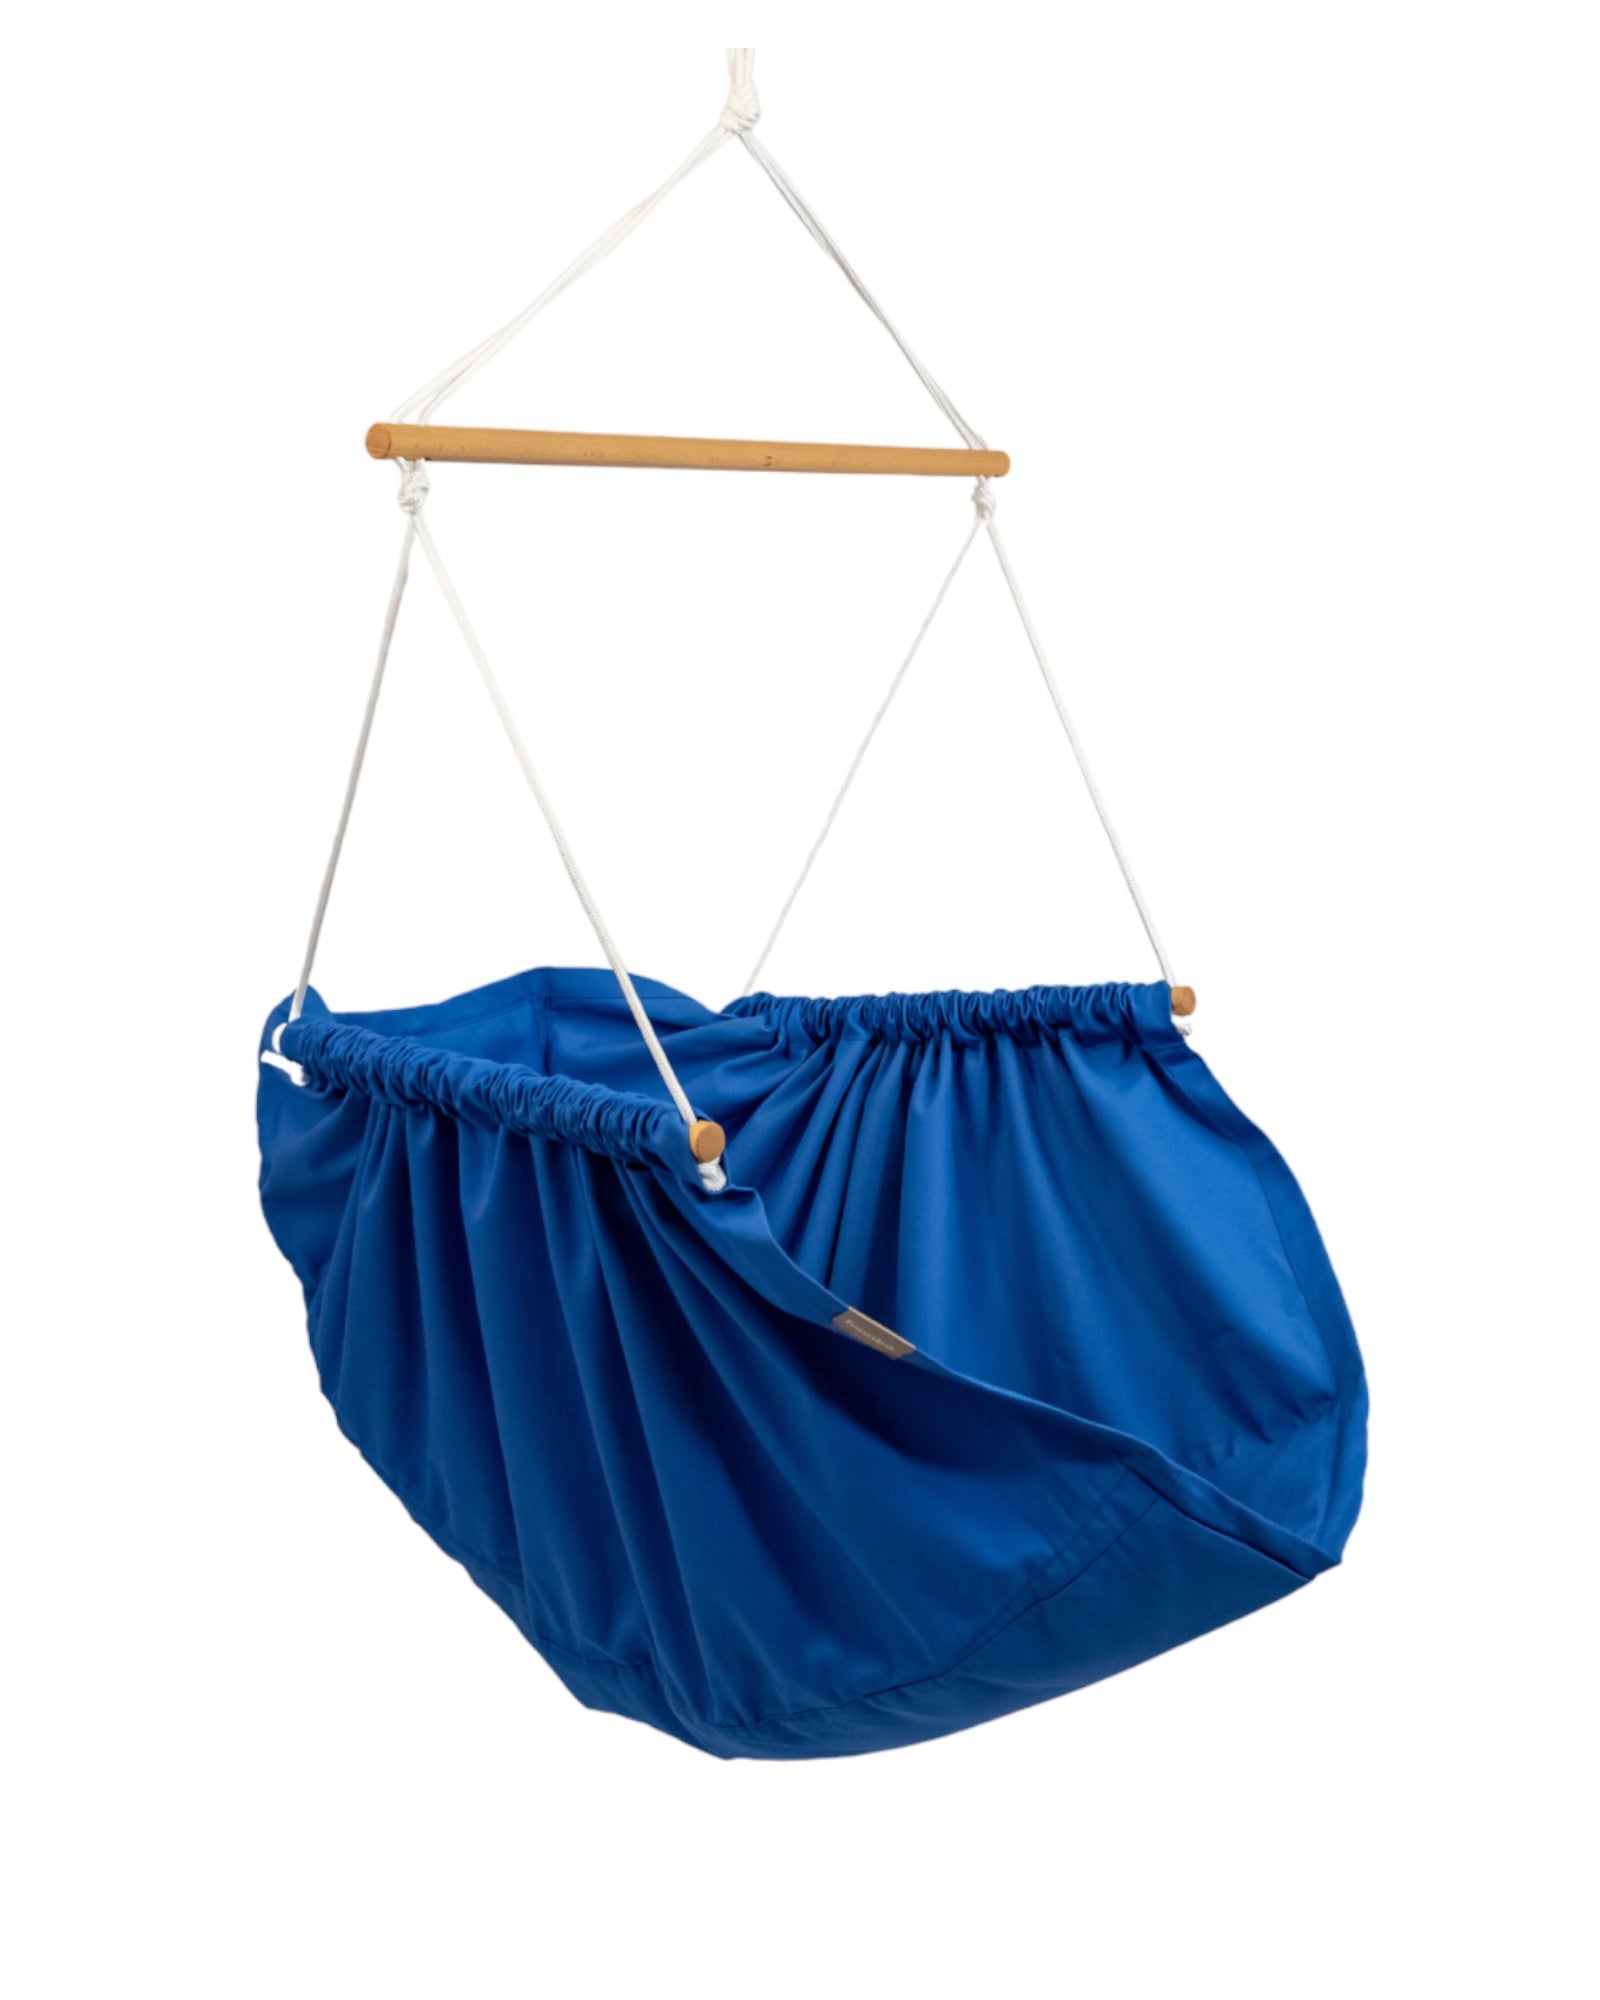 homba® zen hanging chair cotton blue